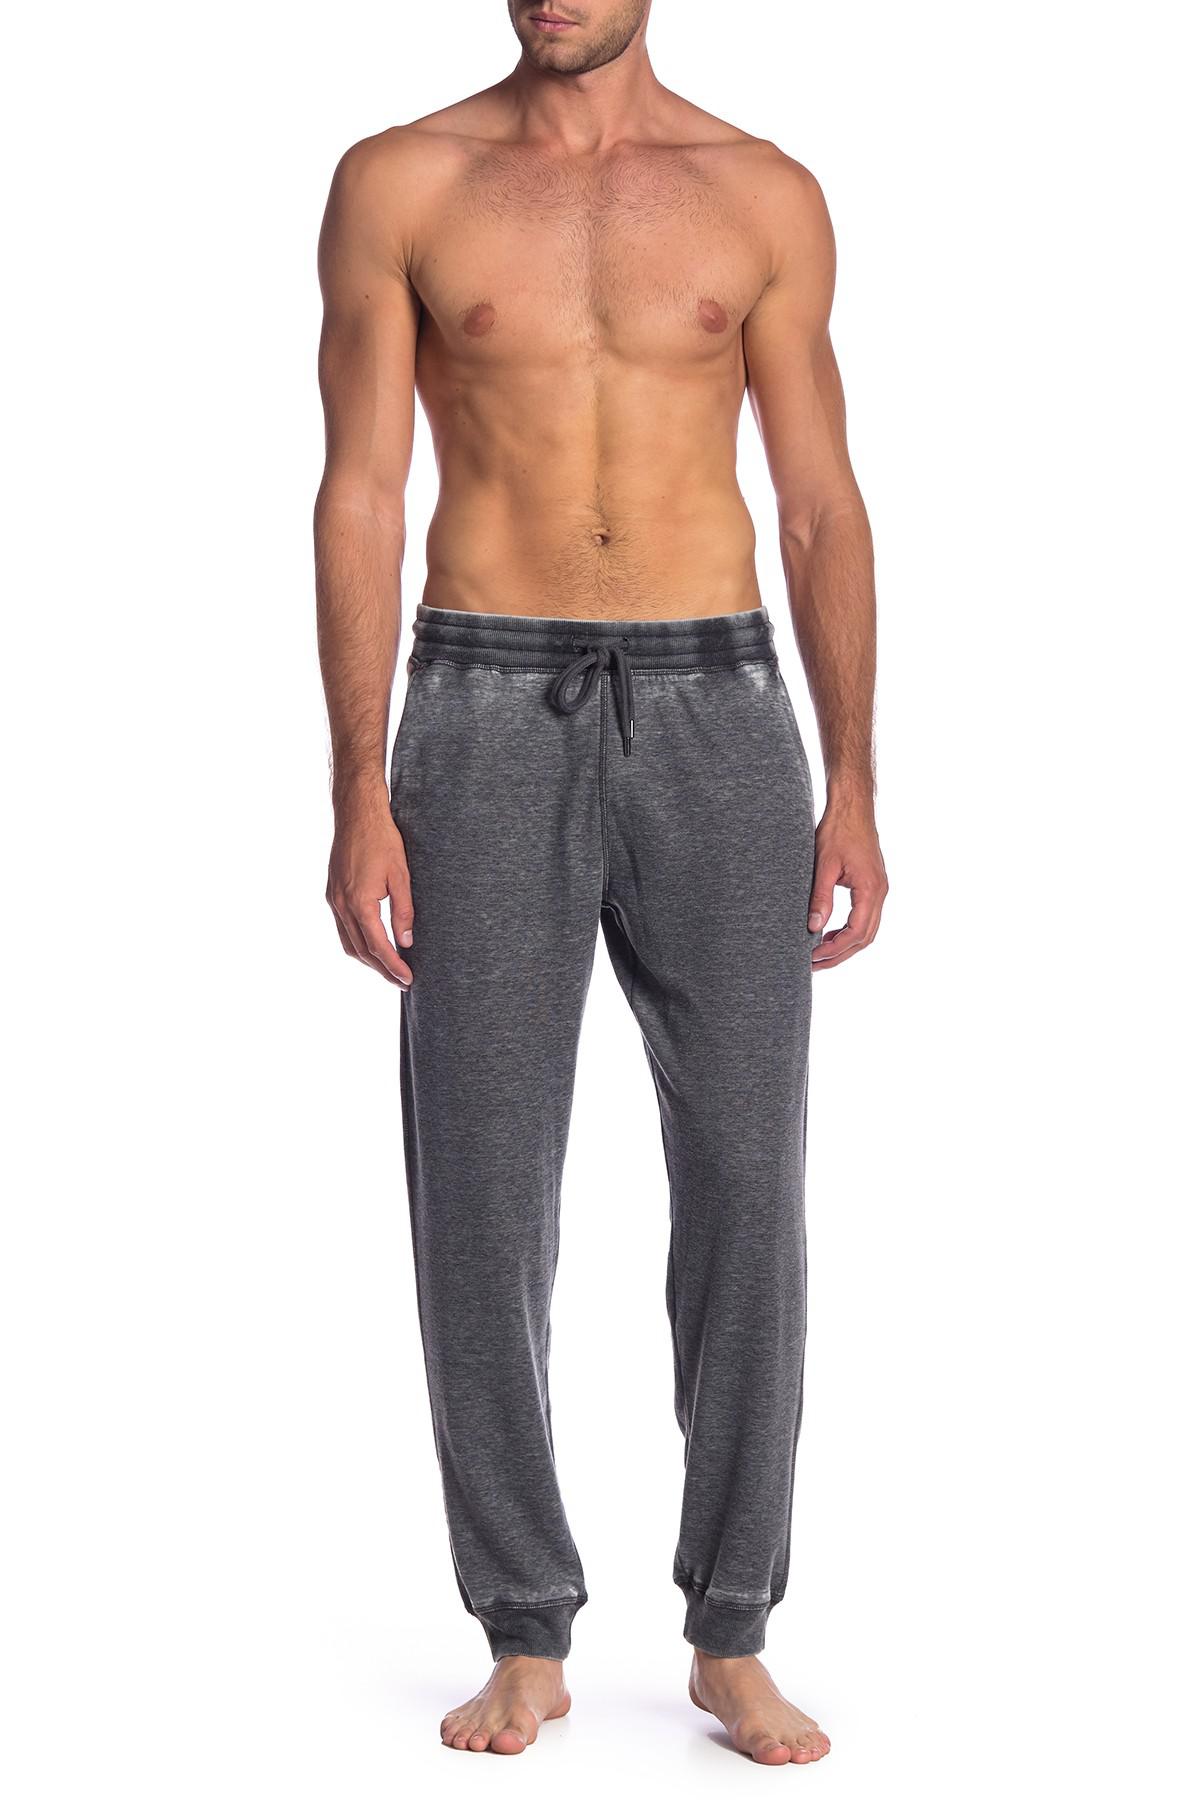 Lyst - Daniel Buchler Acid Wash Fleece Pants in Gray for Men